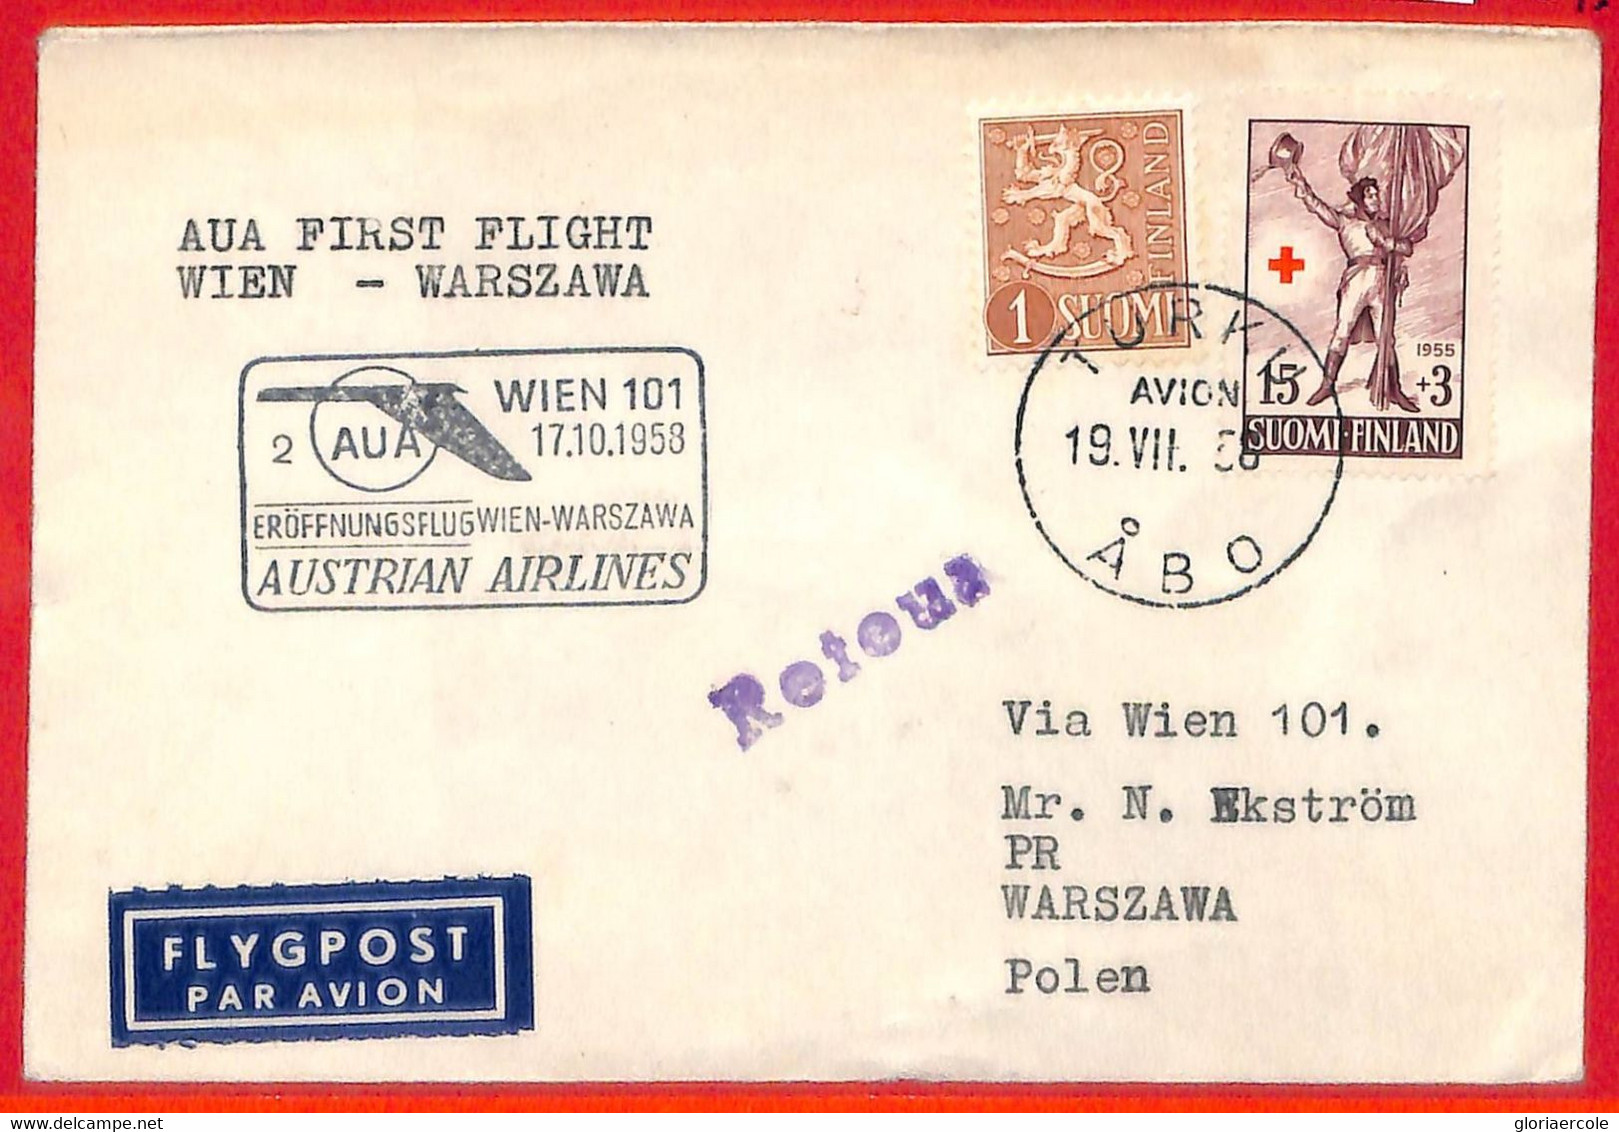 Aa3440 - FINLAND  - Postal History - FIRST FLIGHT COVER Wien - Warsaw  1958 - Briefe U. Dokumente